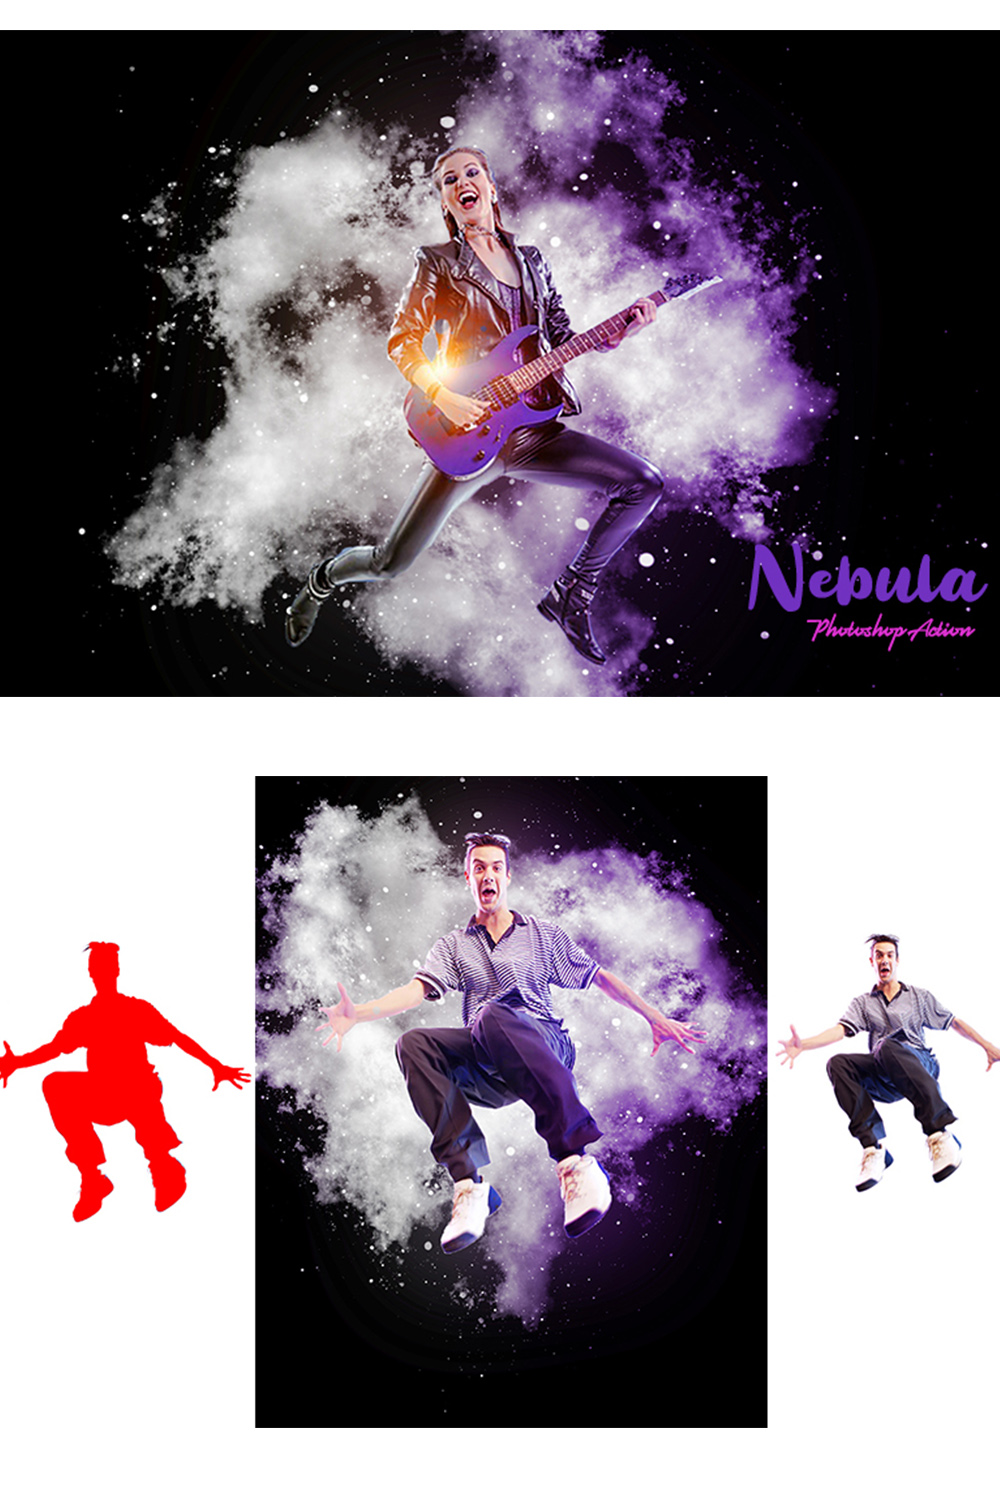 Nebula Photoshop Action pinterest preview image.